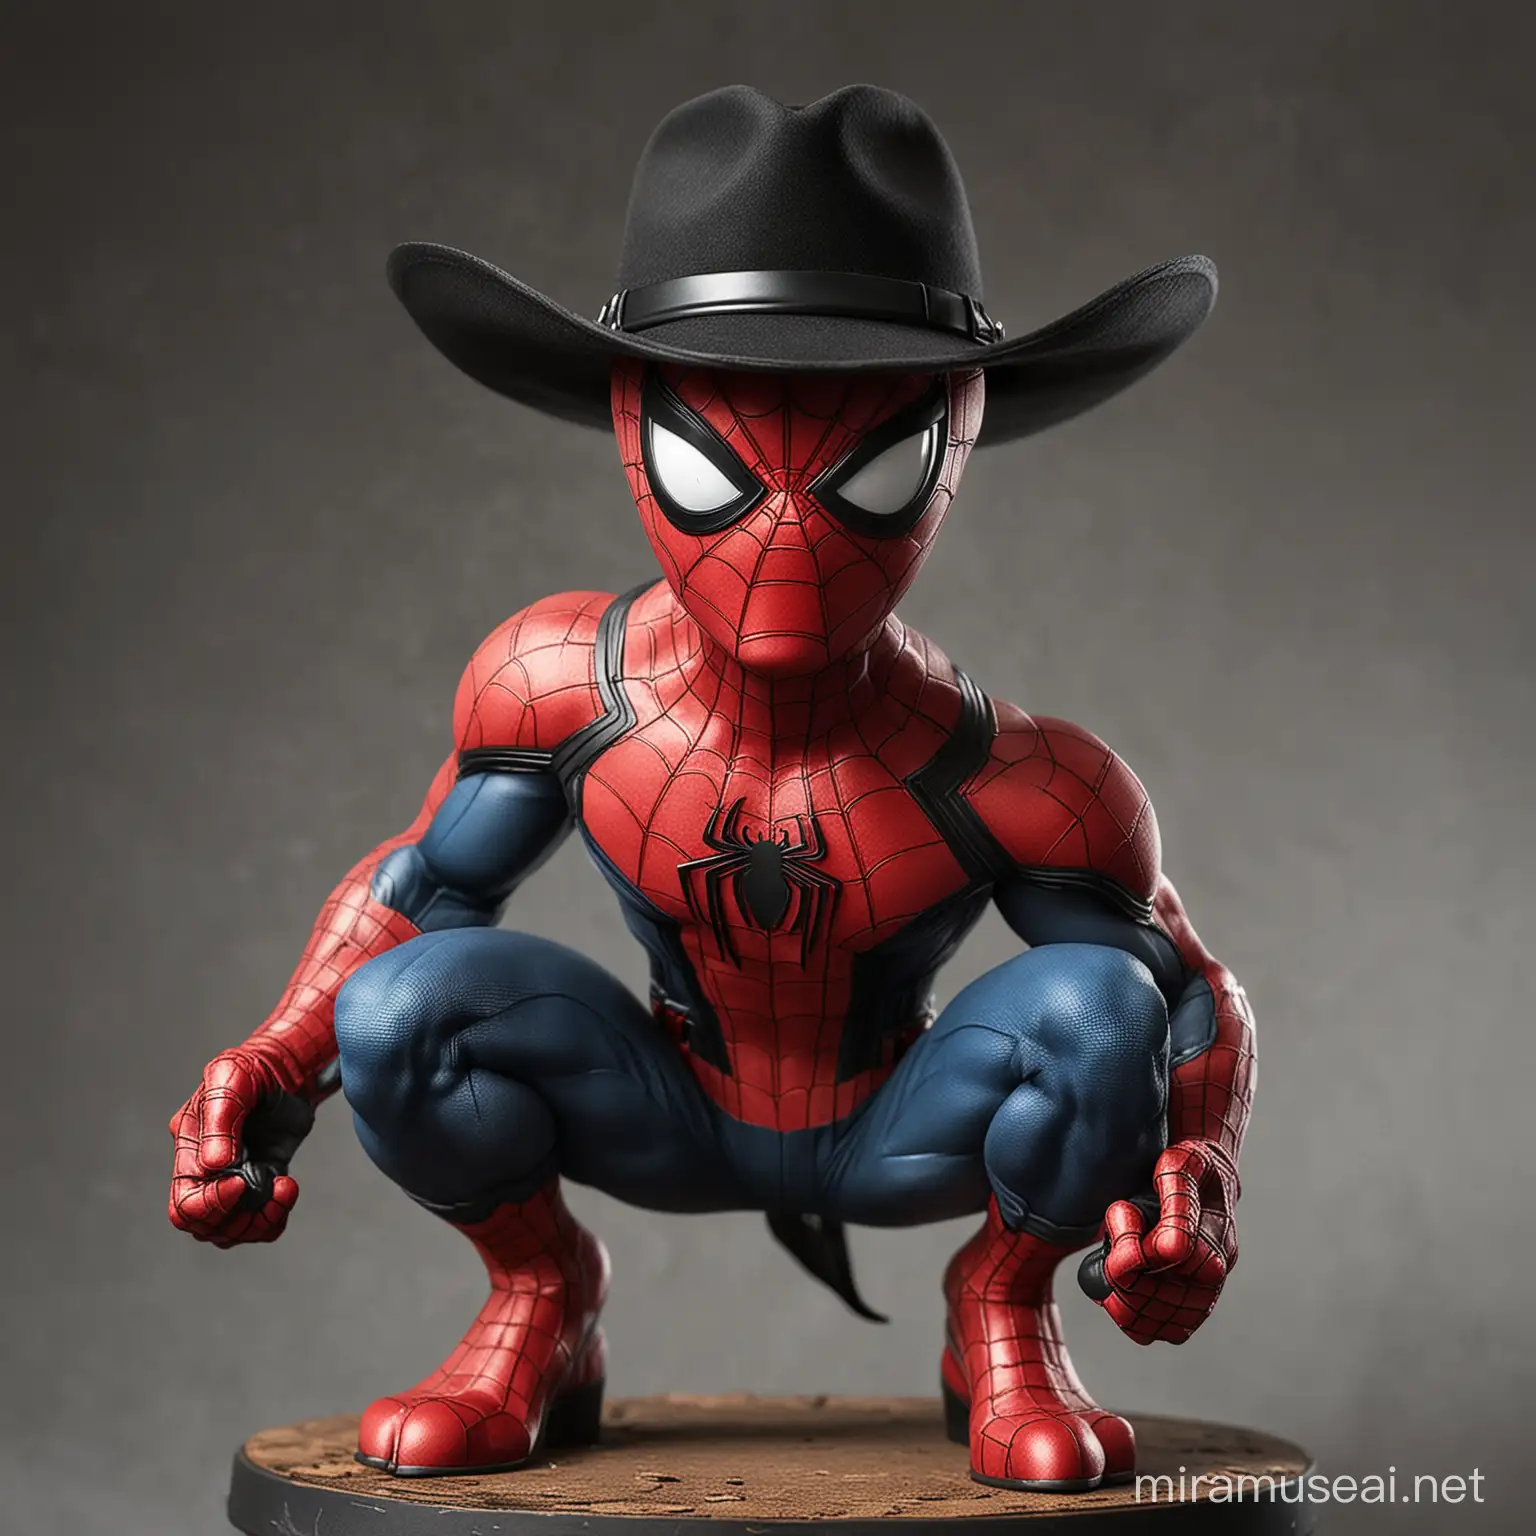 Spiderman Wearing a Stylish Black Cowboy Hat